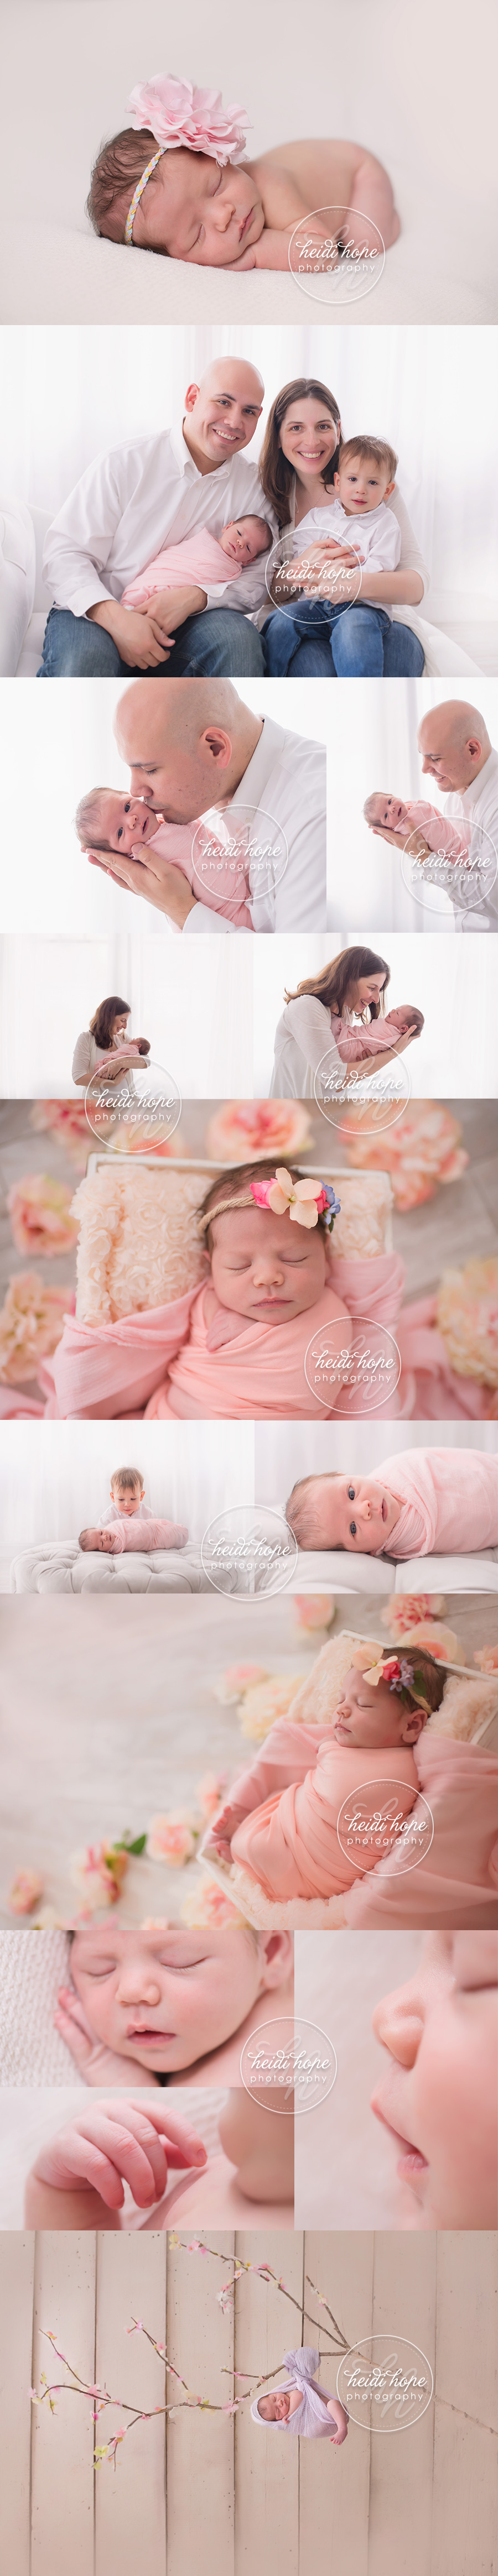 newborn-baby-girl-in-the-flowers-by-rhode-island-newborn-photographer-heidi-hope